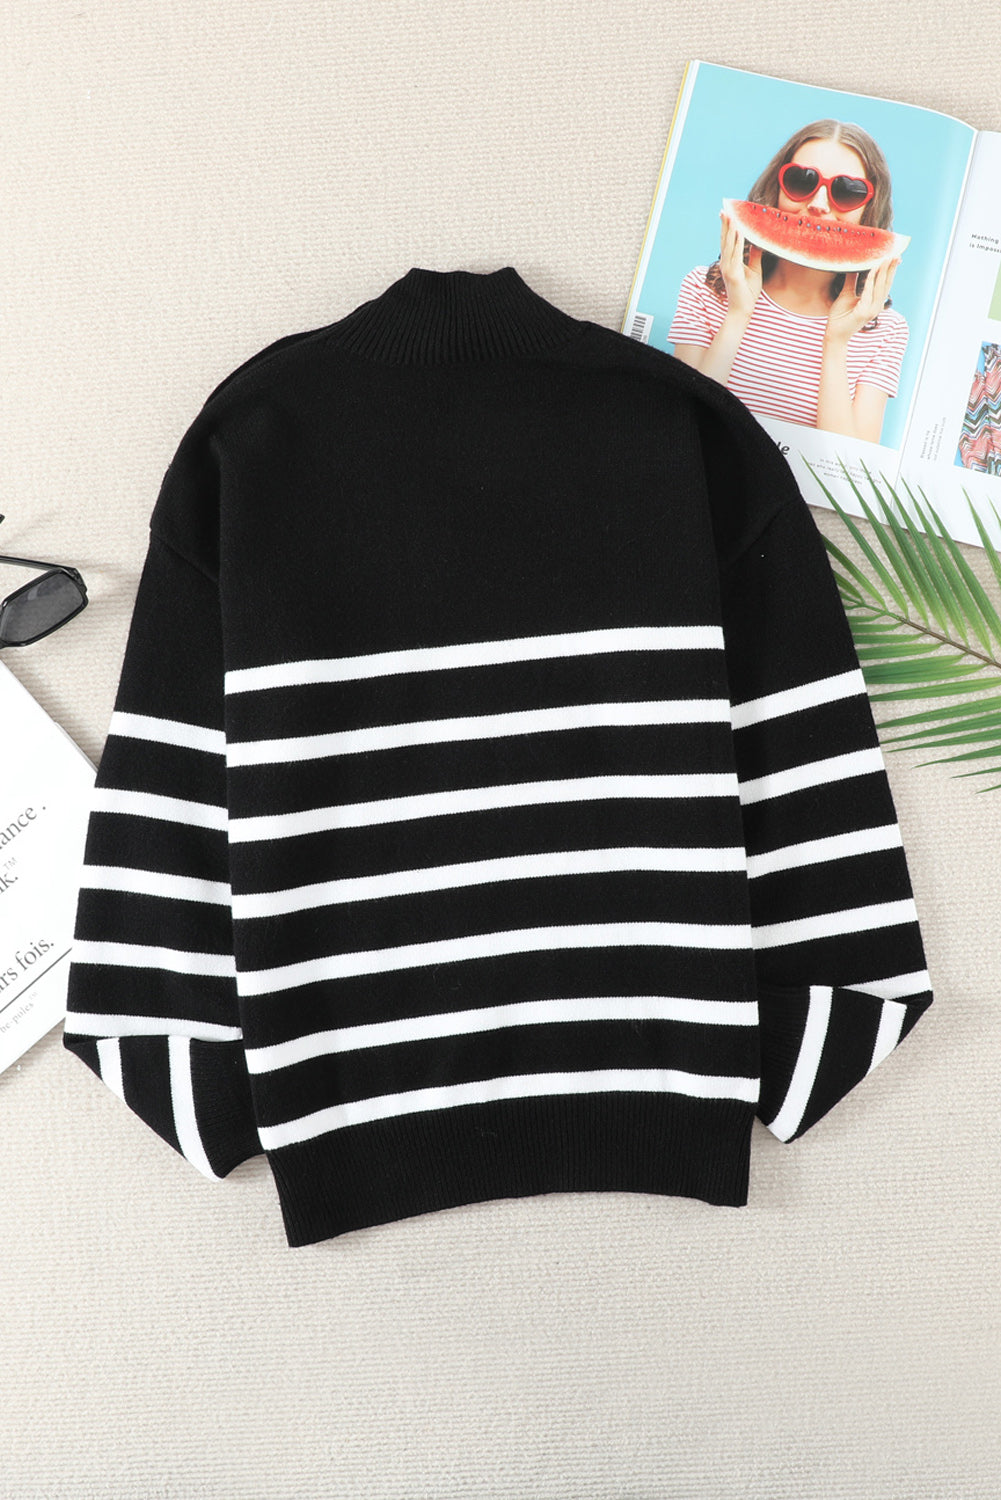 Black Striped Turtleneck Sweater